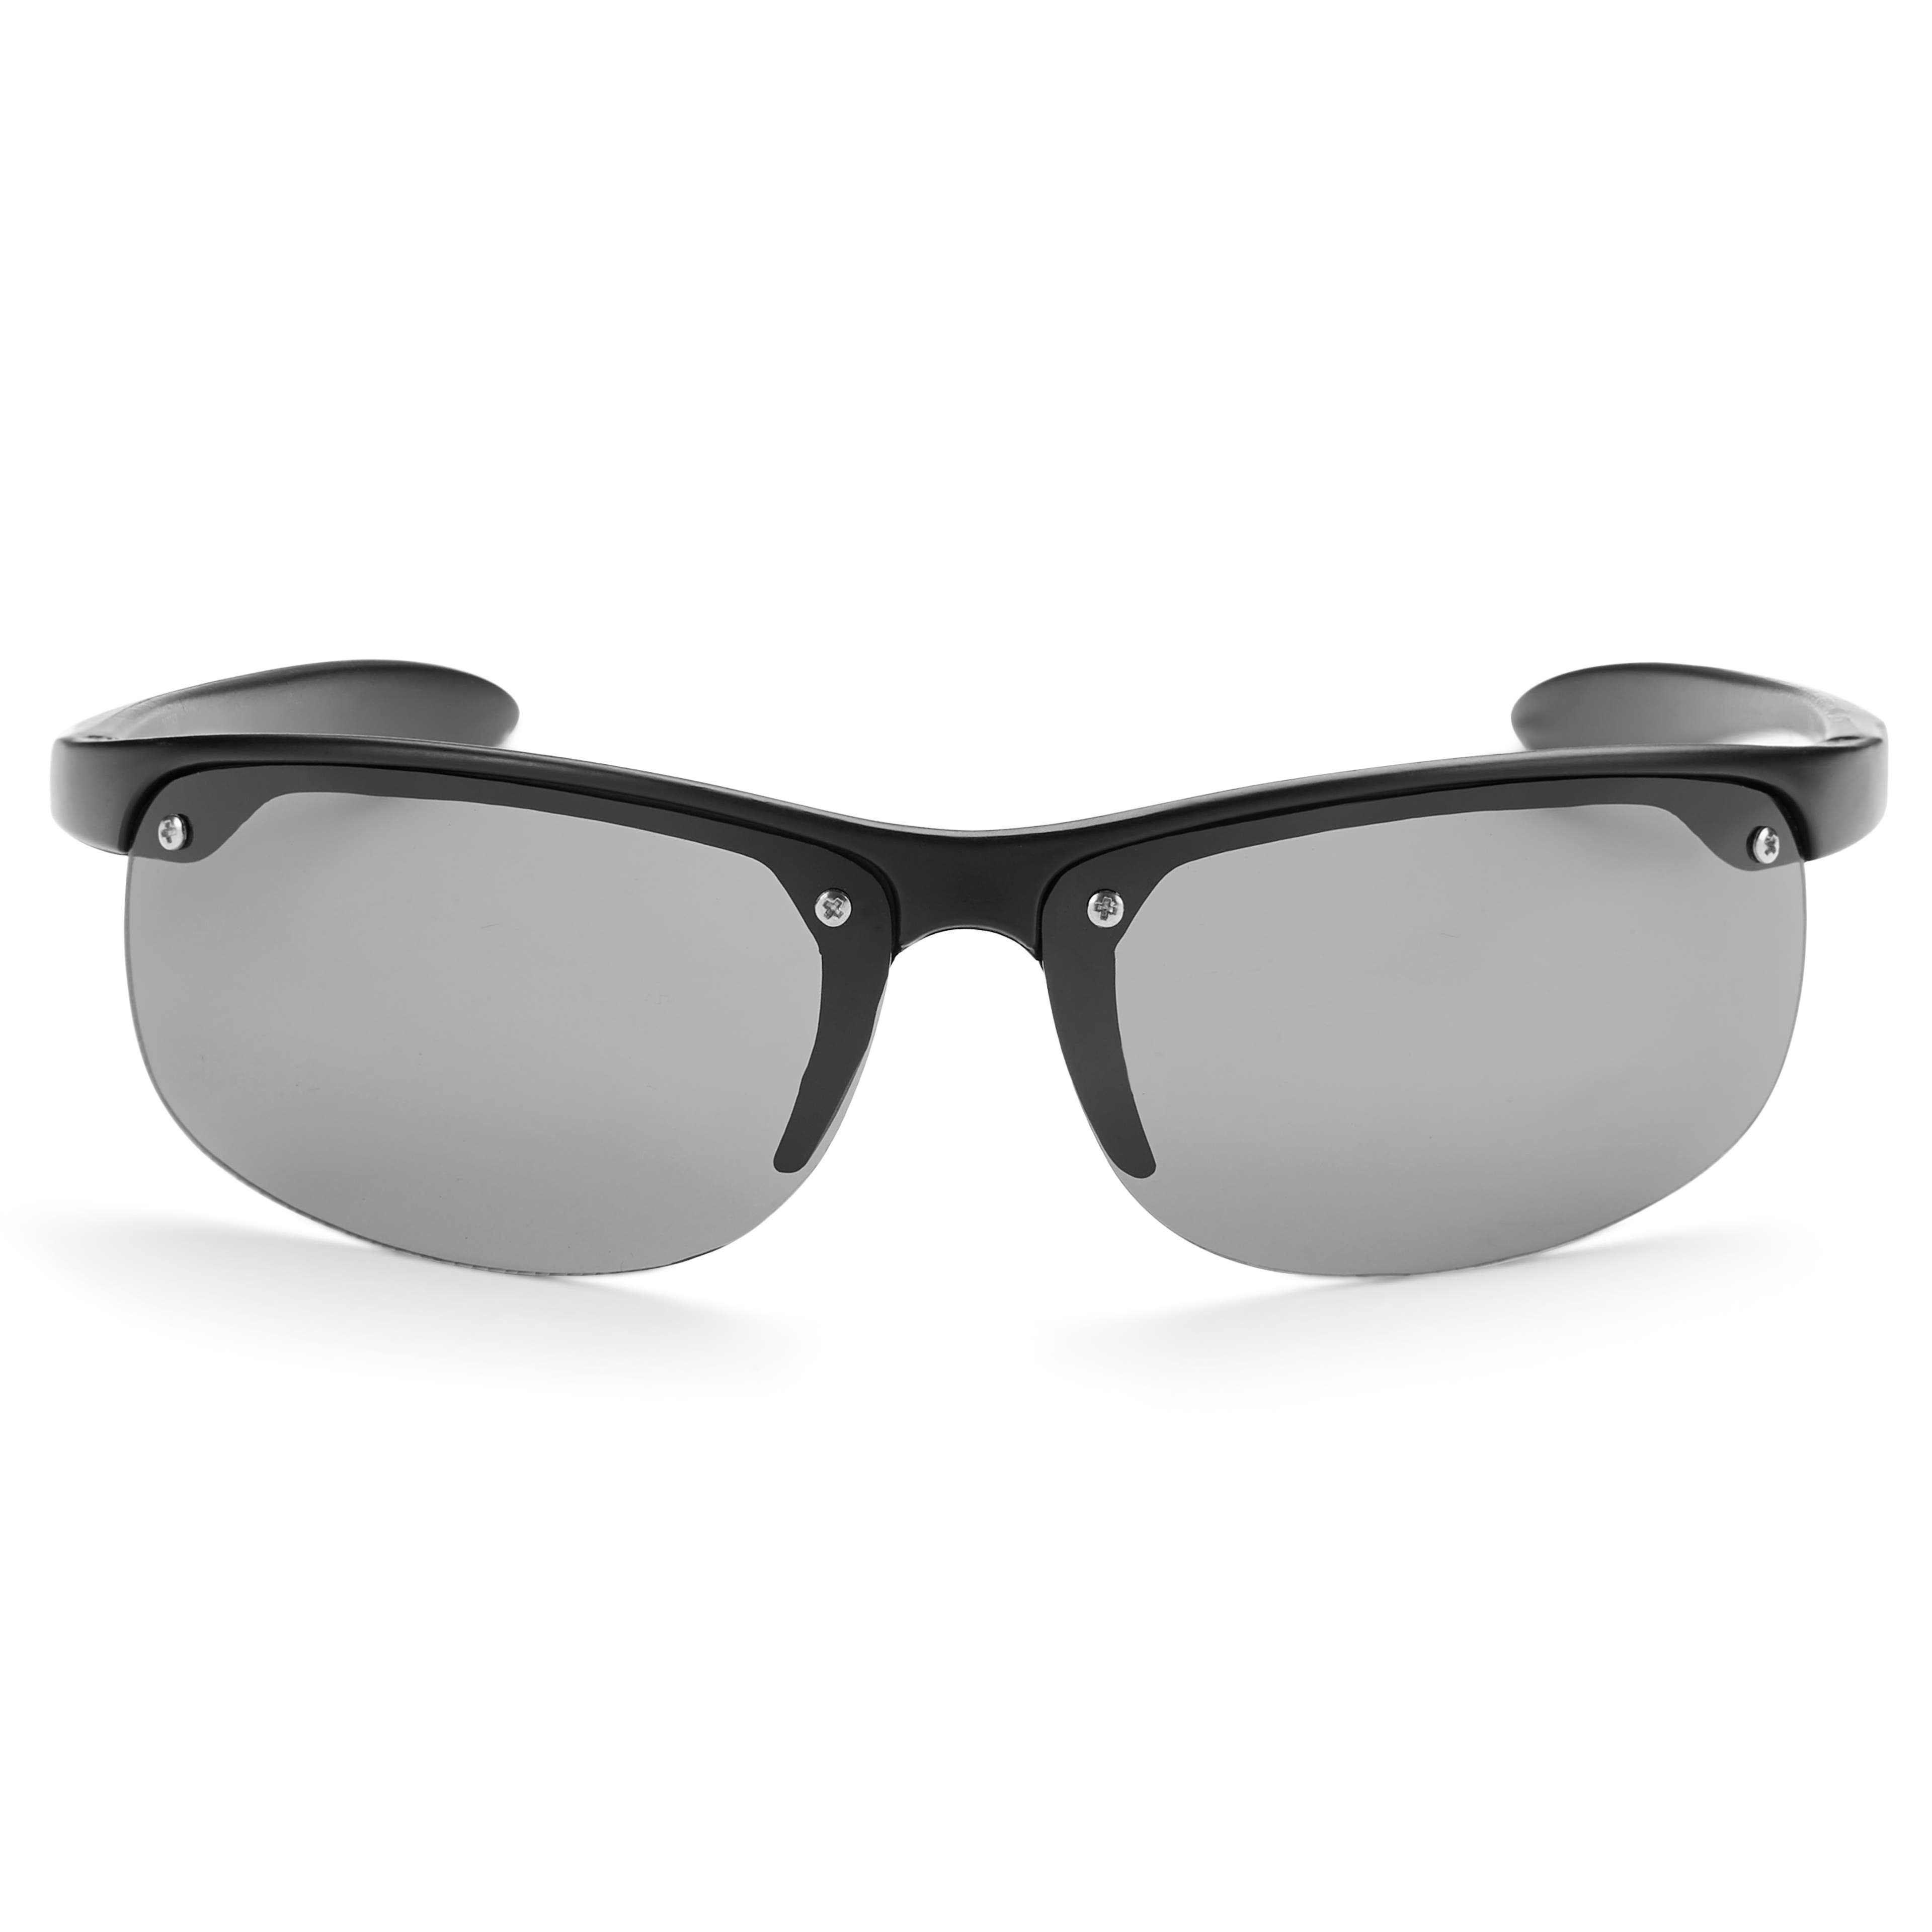 Gafas de sol deportivas envolventes negras con lentes ahumadas